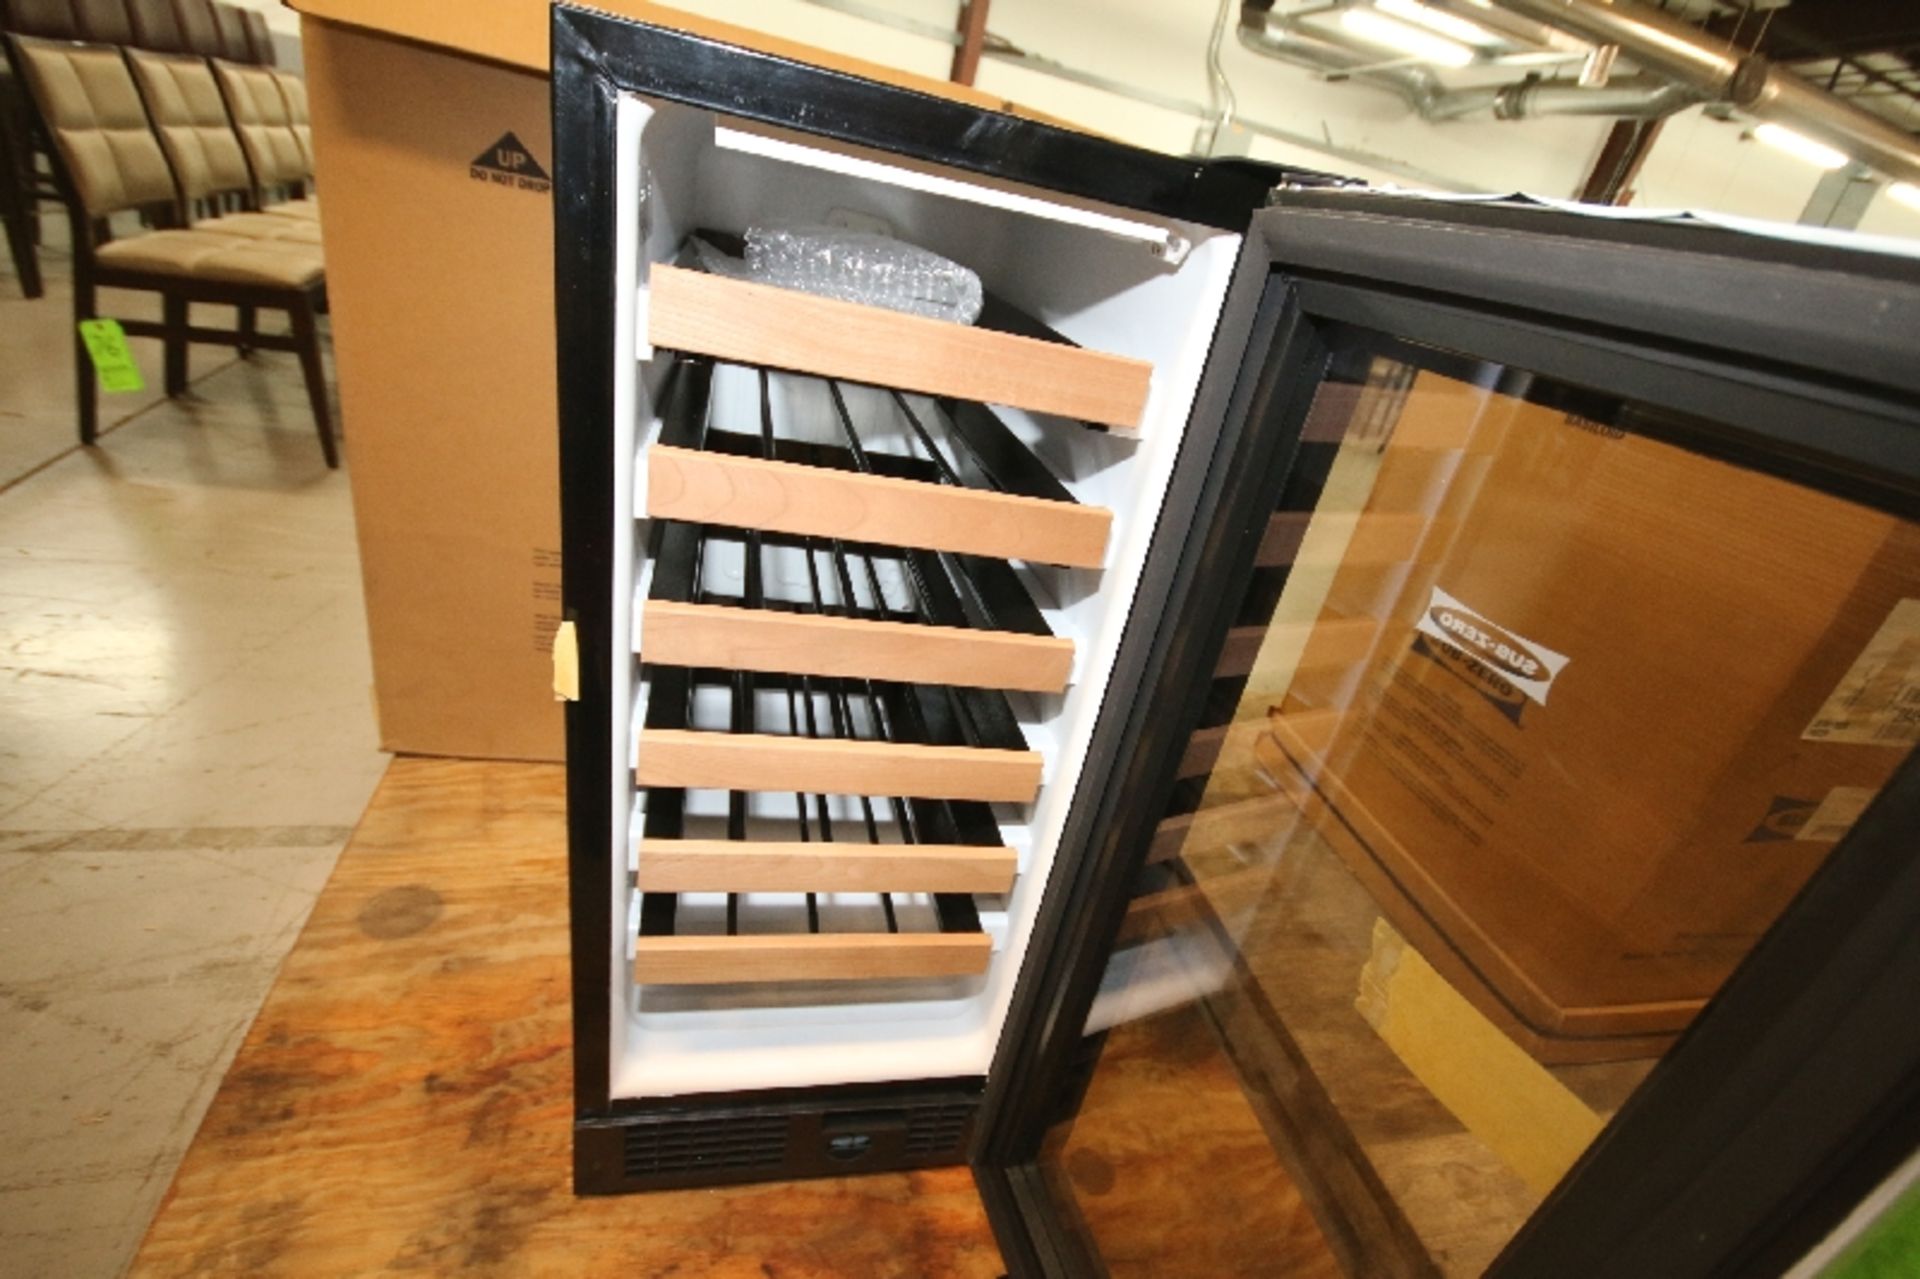 New SubZero Wine Storage Cooler Unit, Model 315W/S-H, S/N 2845357 - Image 2 of 3